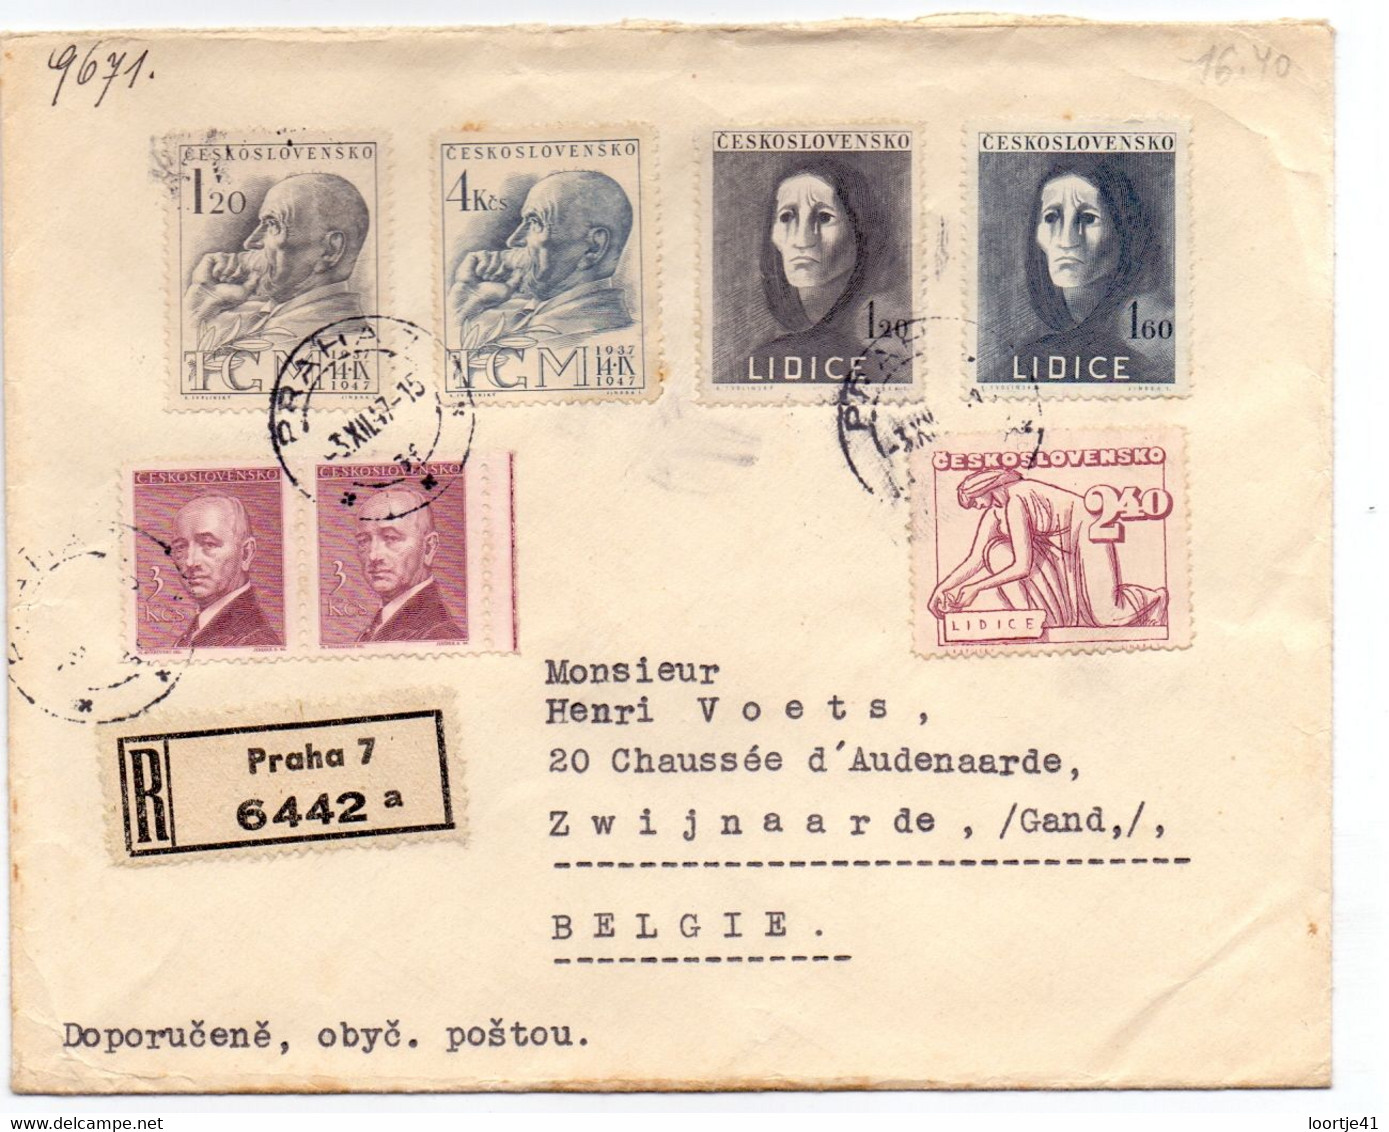 Omslag Enveloppe - Praha Ceskoslovensko Naar Gand Gent - Recommandé Stempel Cachet 1947 - Buste